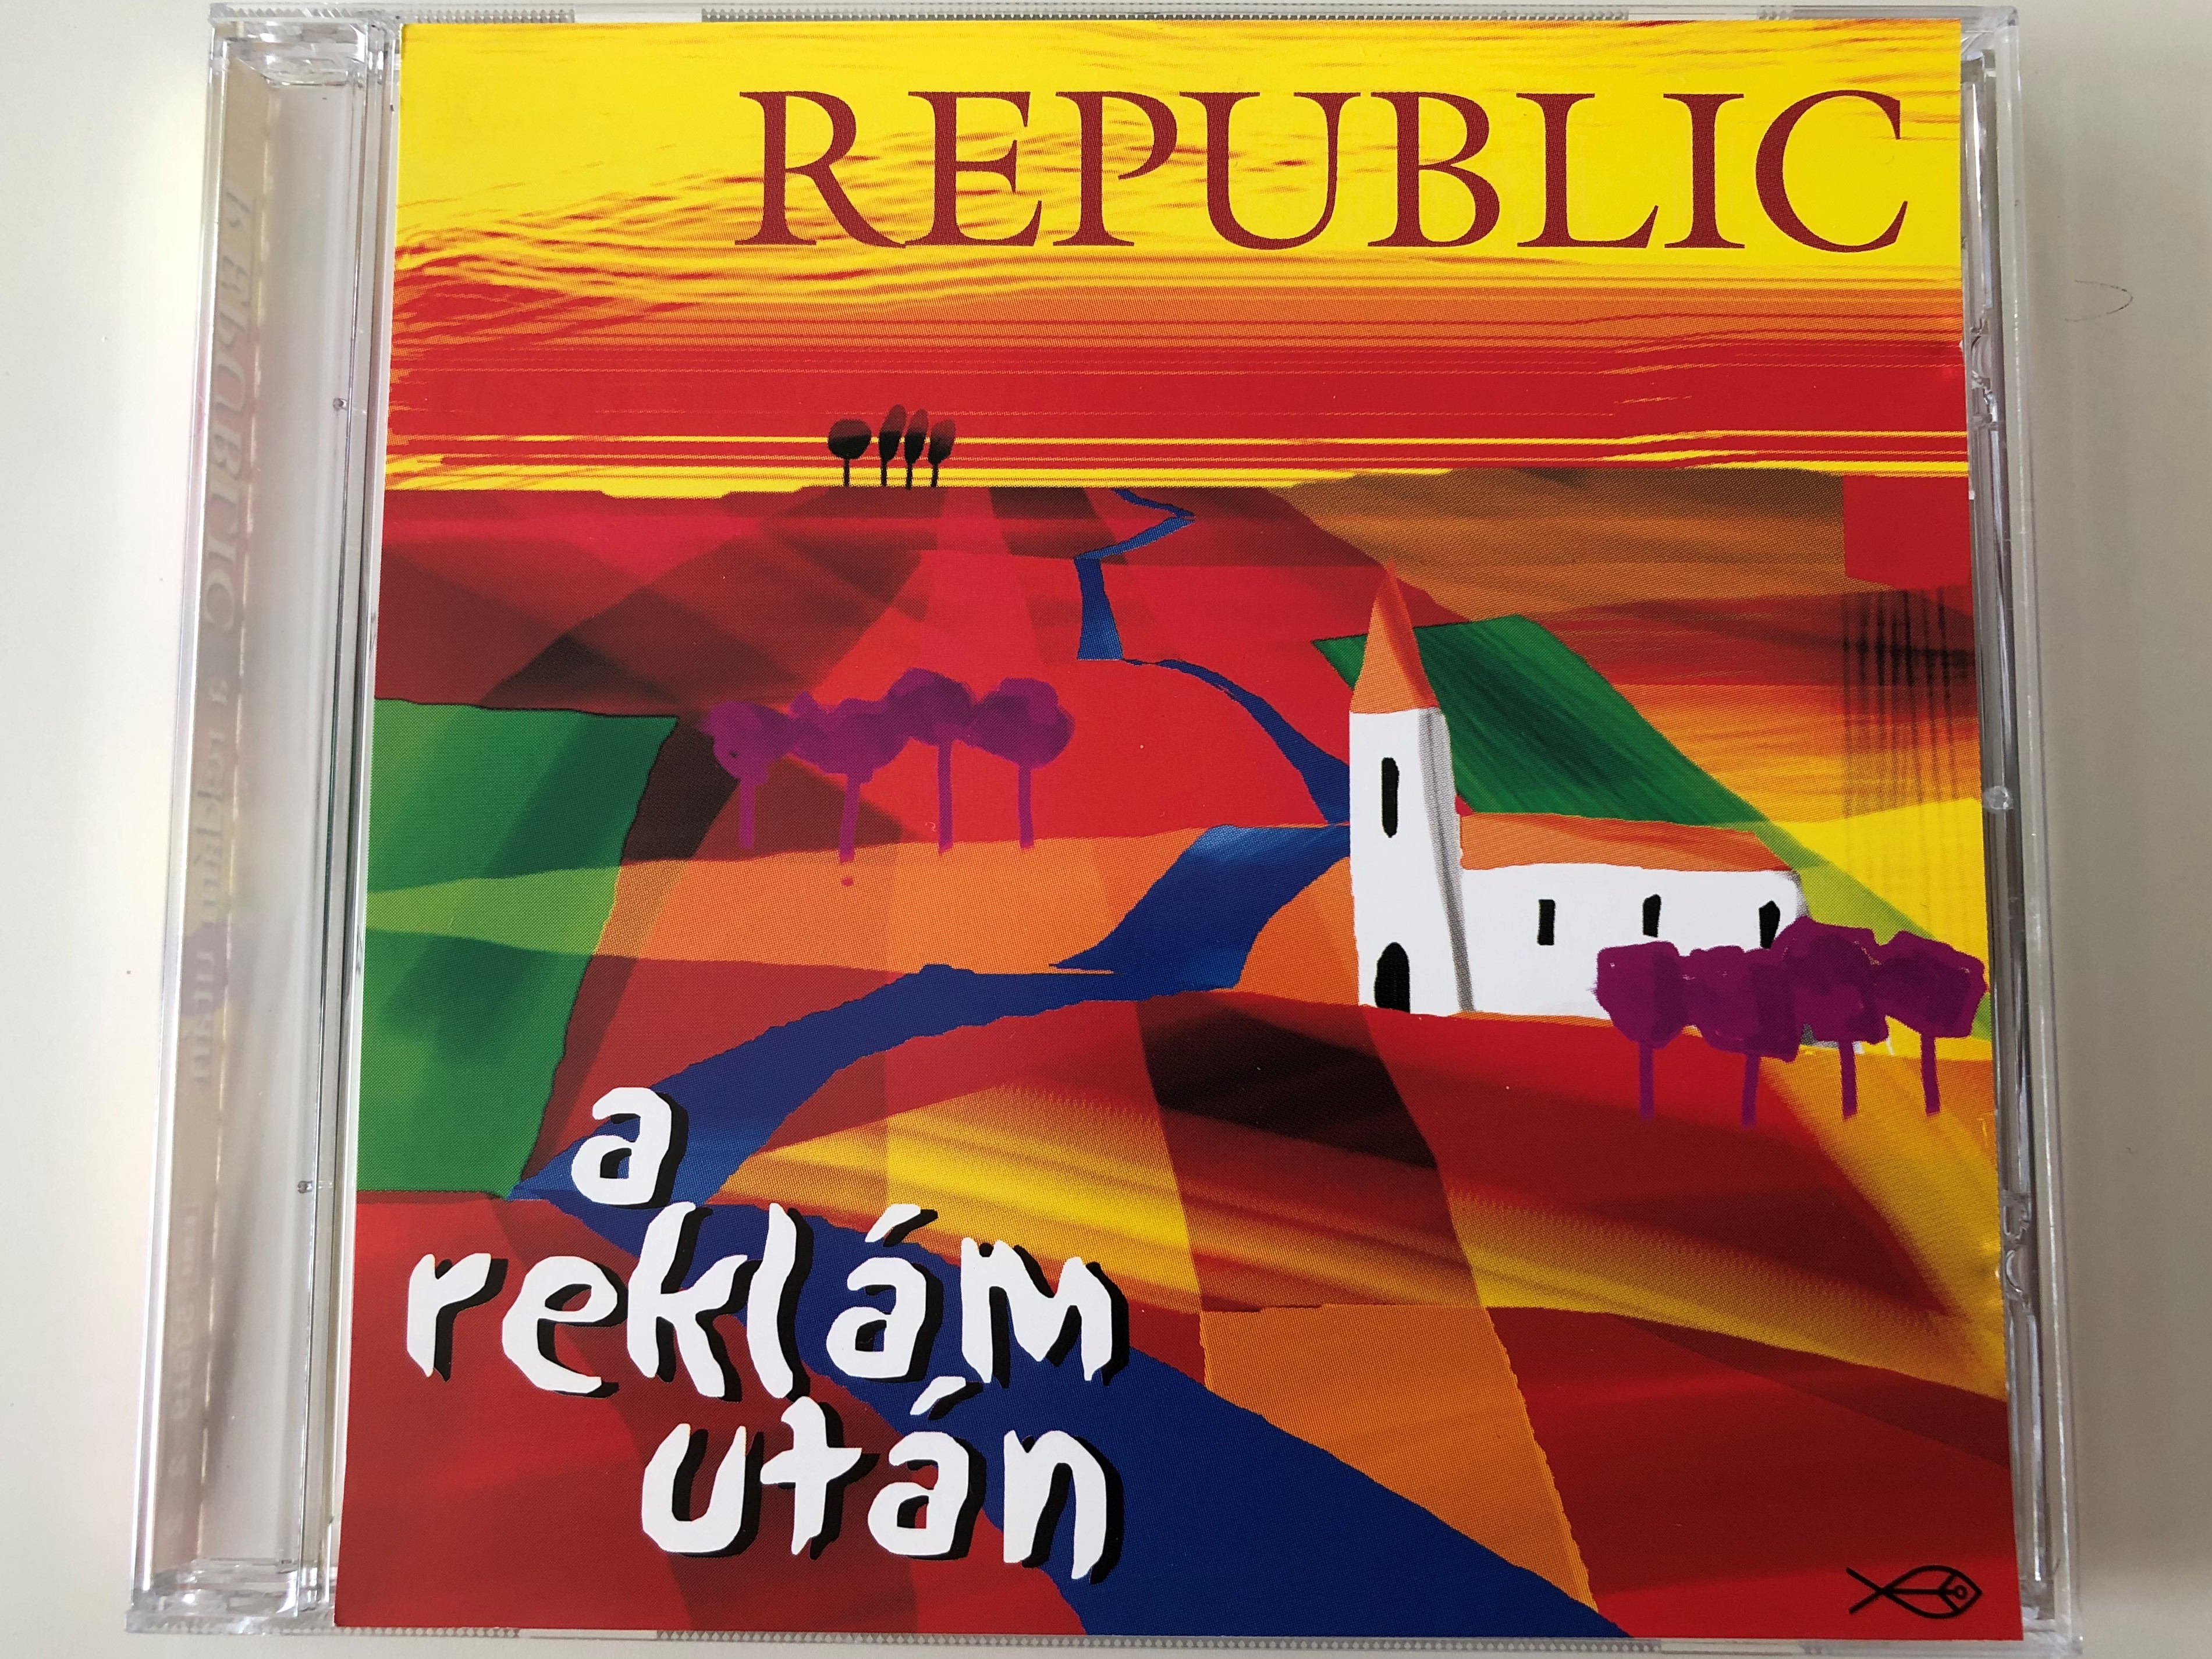 republic-a-rekl-m-ut-n-emi-audio-cd-2001-53619-2-2-1-.jpg